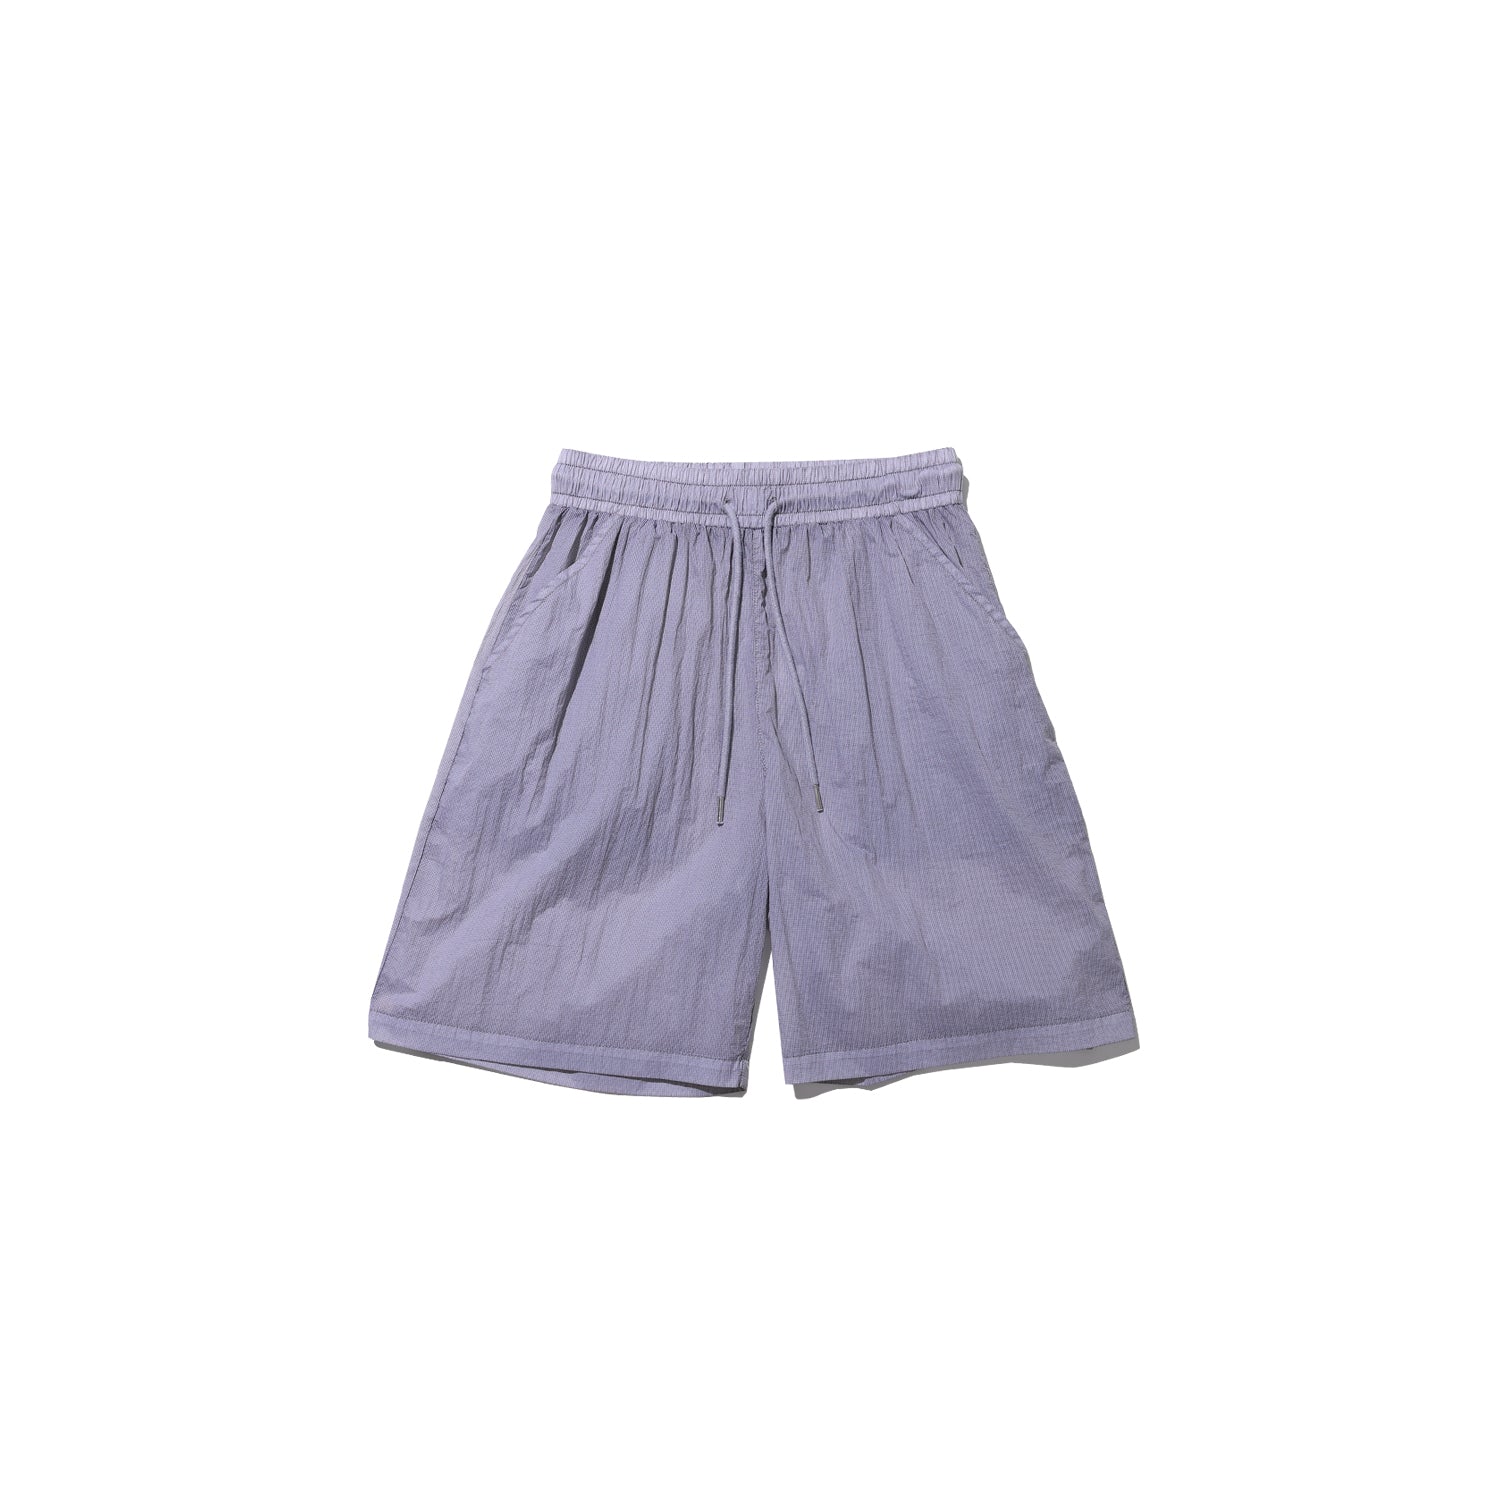 Fort Pigment Nylon Shorts (3color)